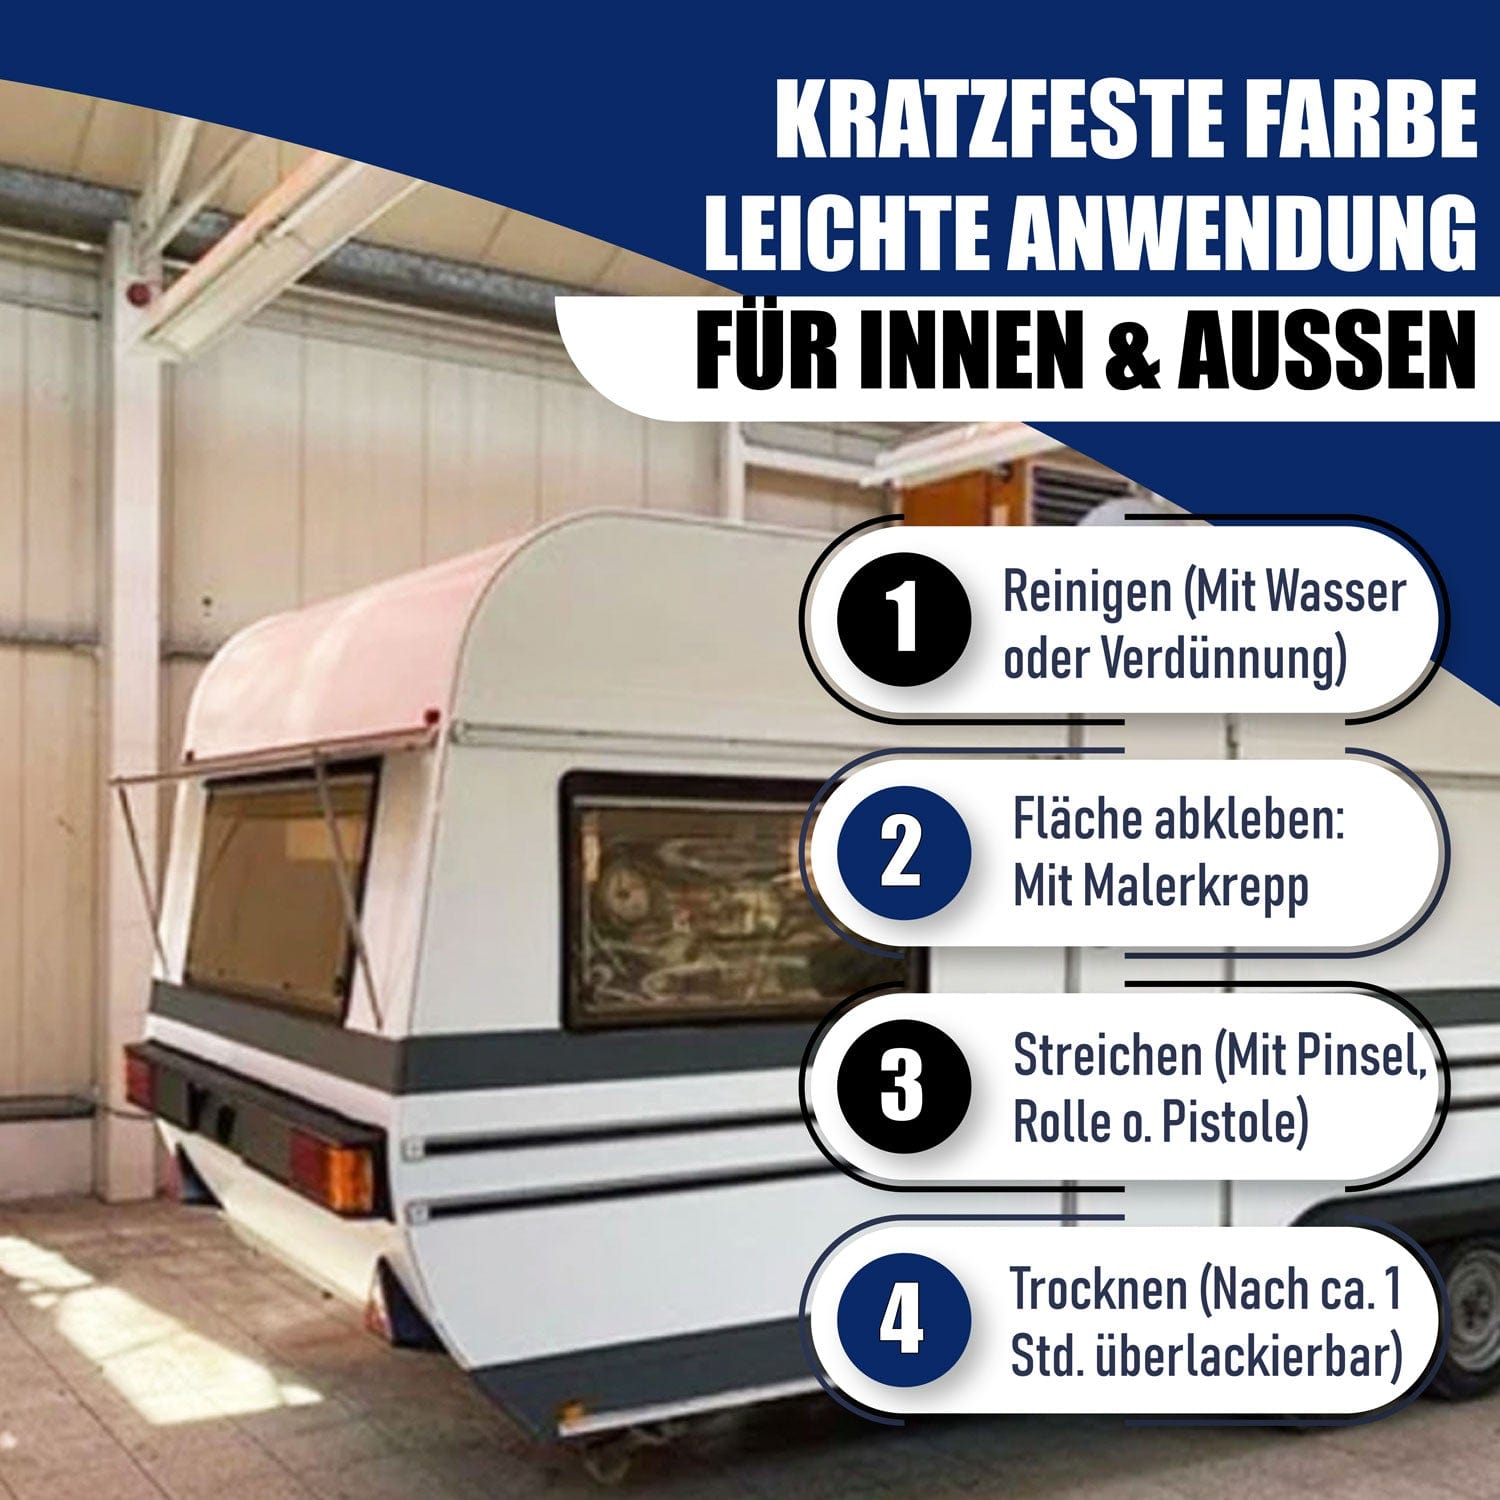 Hamburger Lack-Profi Lacke & Beschichtungen Hamburger Lack-Profi 2K Autolack in Braungrau RAL 7013 mit Lackierset (X300) & Verdünnung (1 L) - 30% Sparangebot